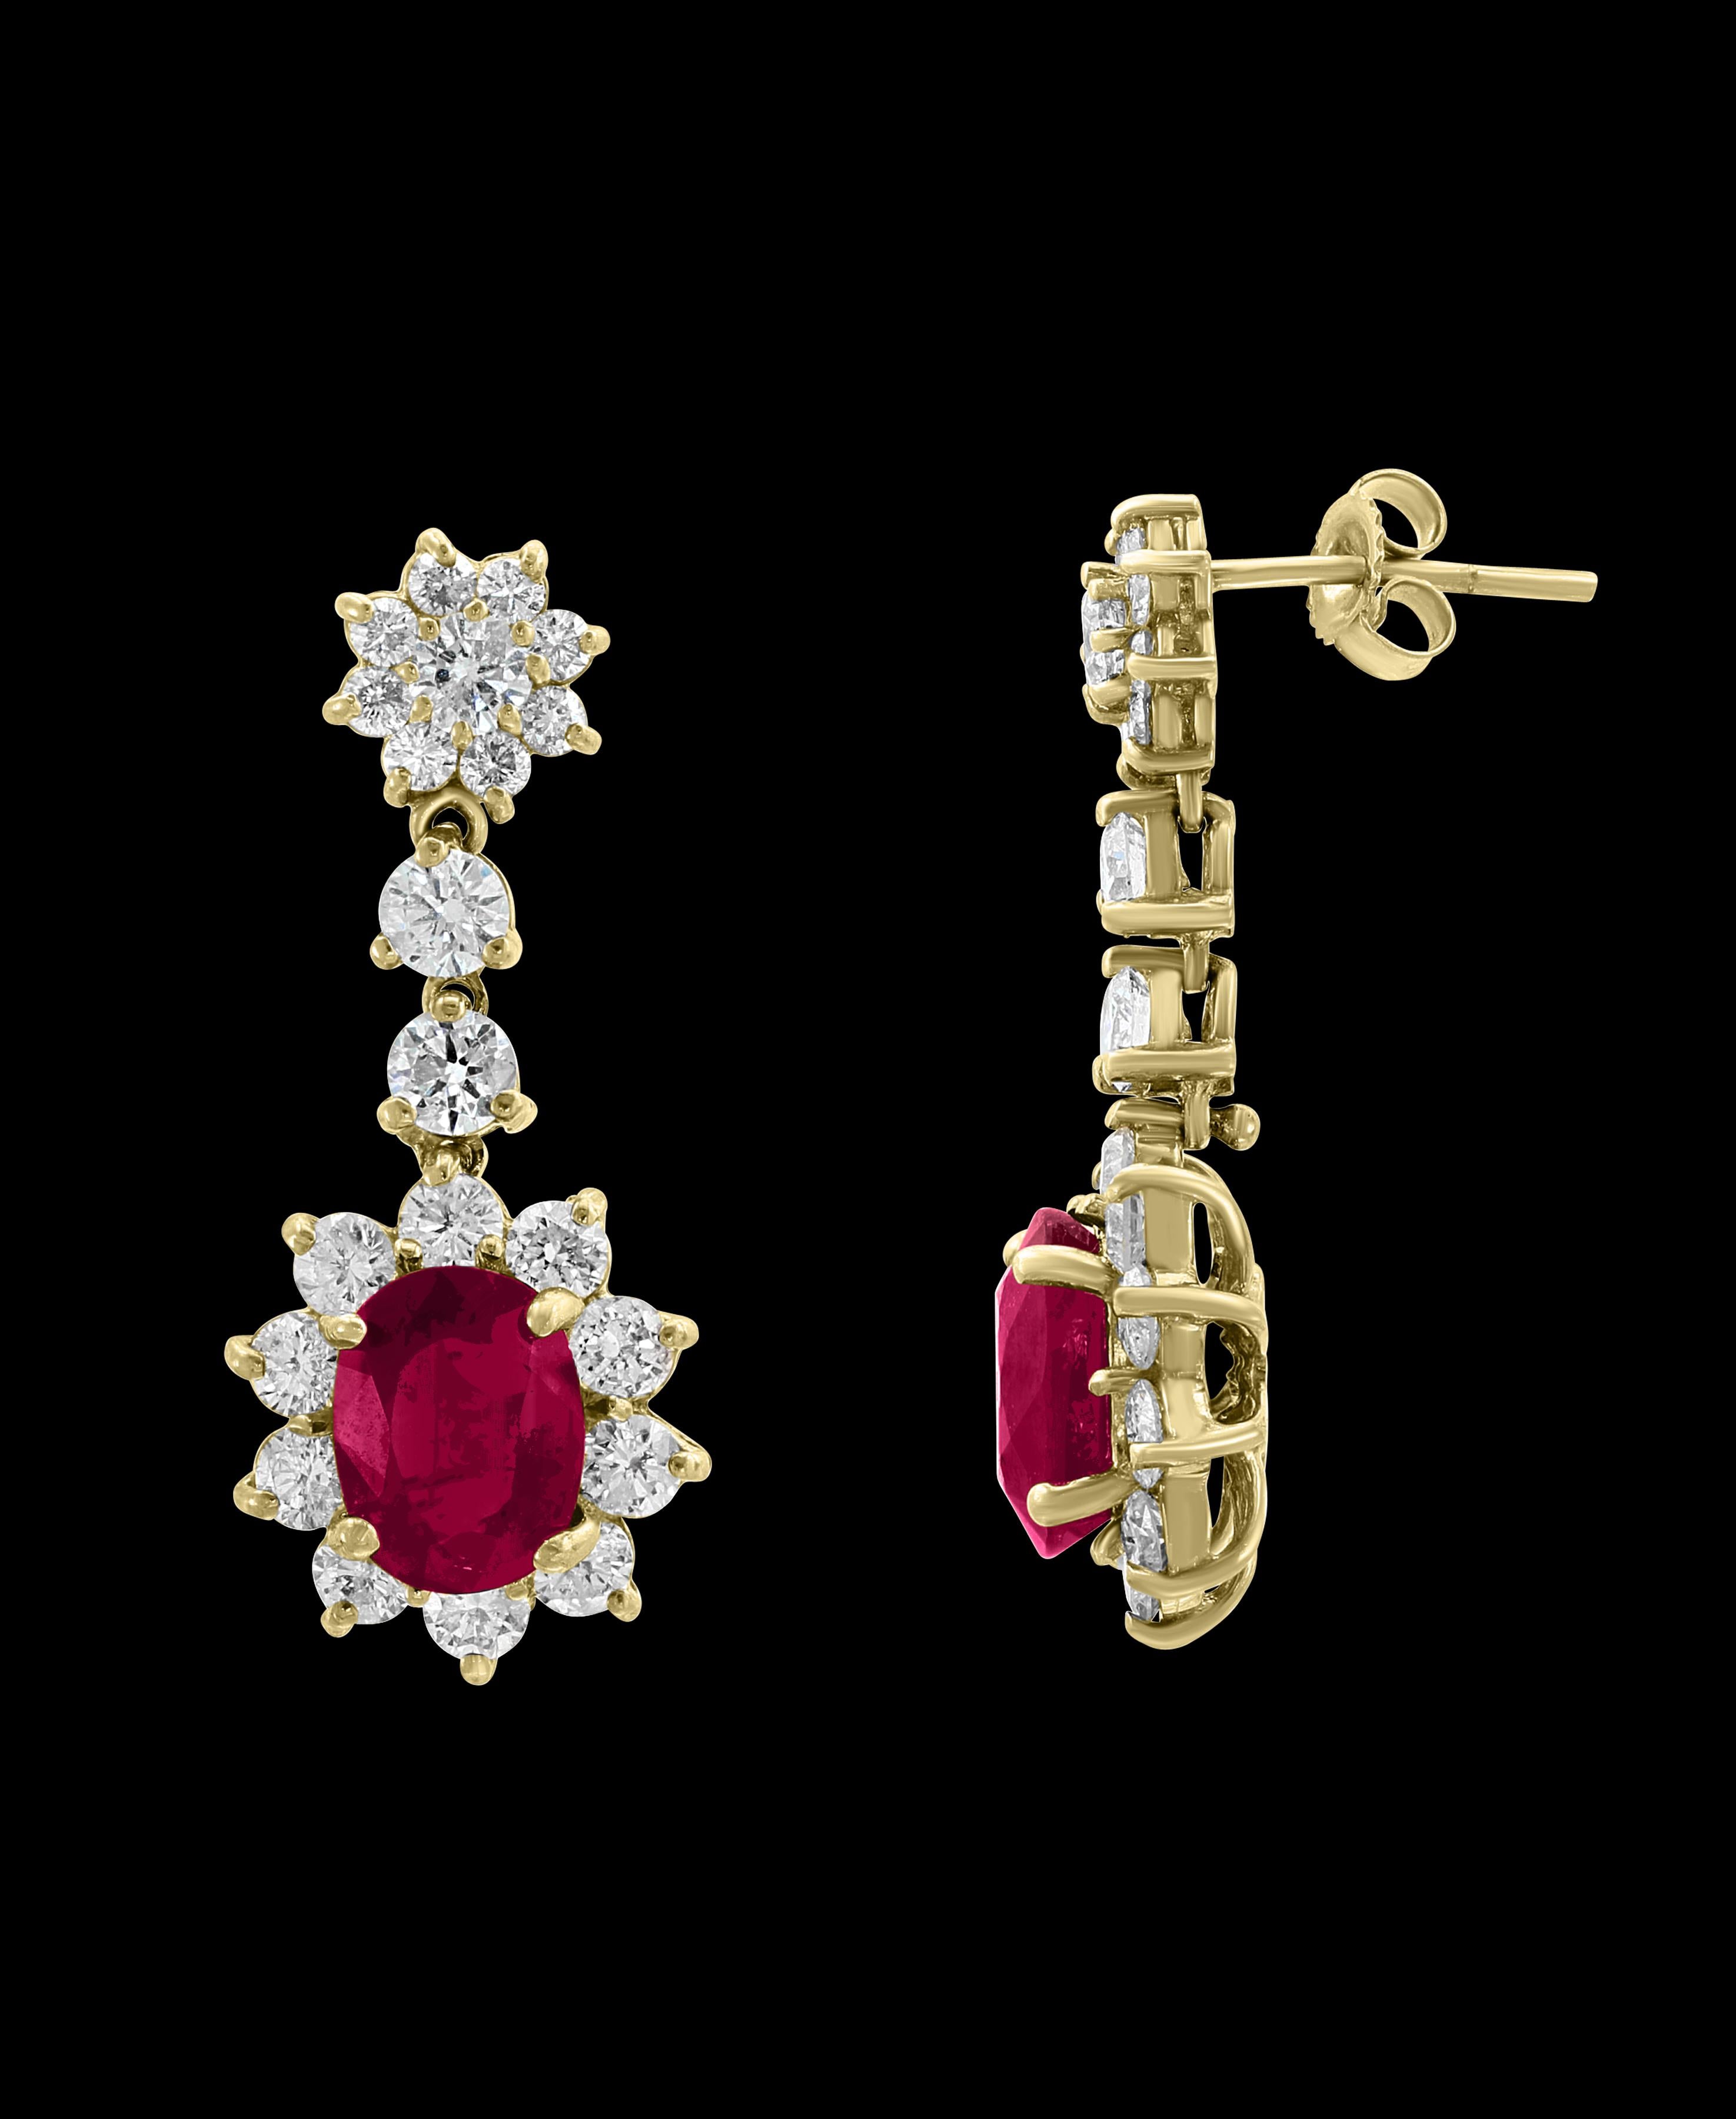 5.5 Carat Ruby and 5 Carat Diamond Hanging or Chandelier Earrings 18 Karat Gold 2